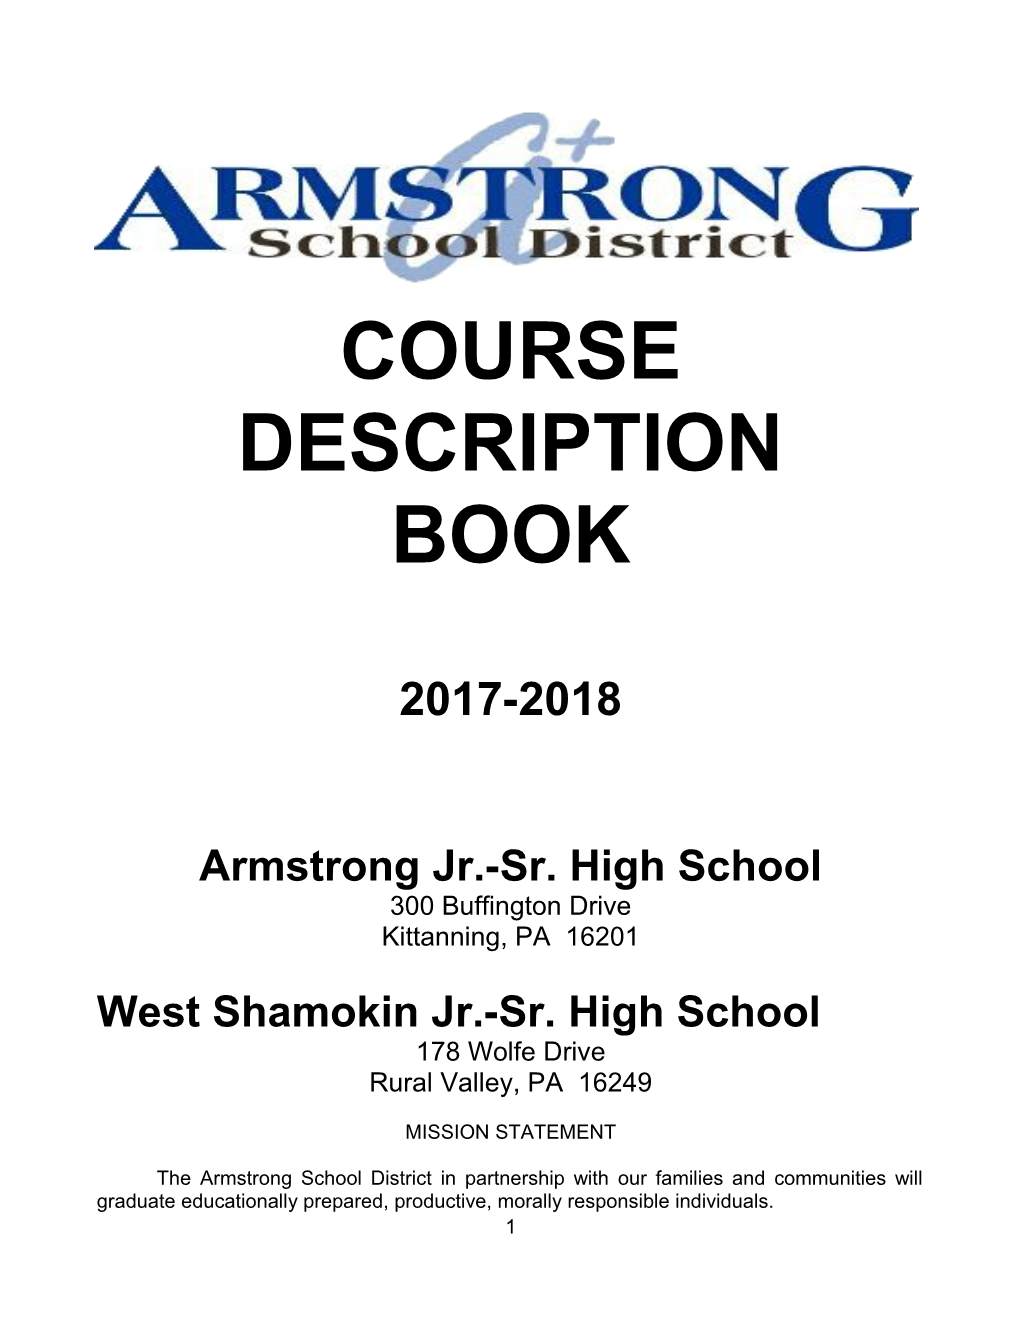 Armstrong Jr.-Sr. High School